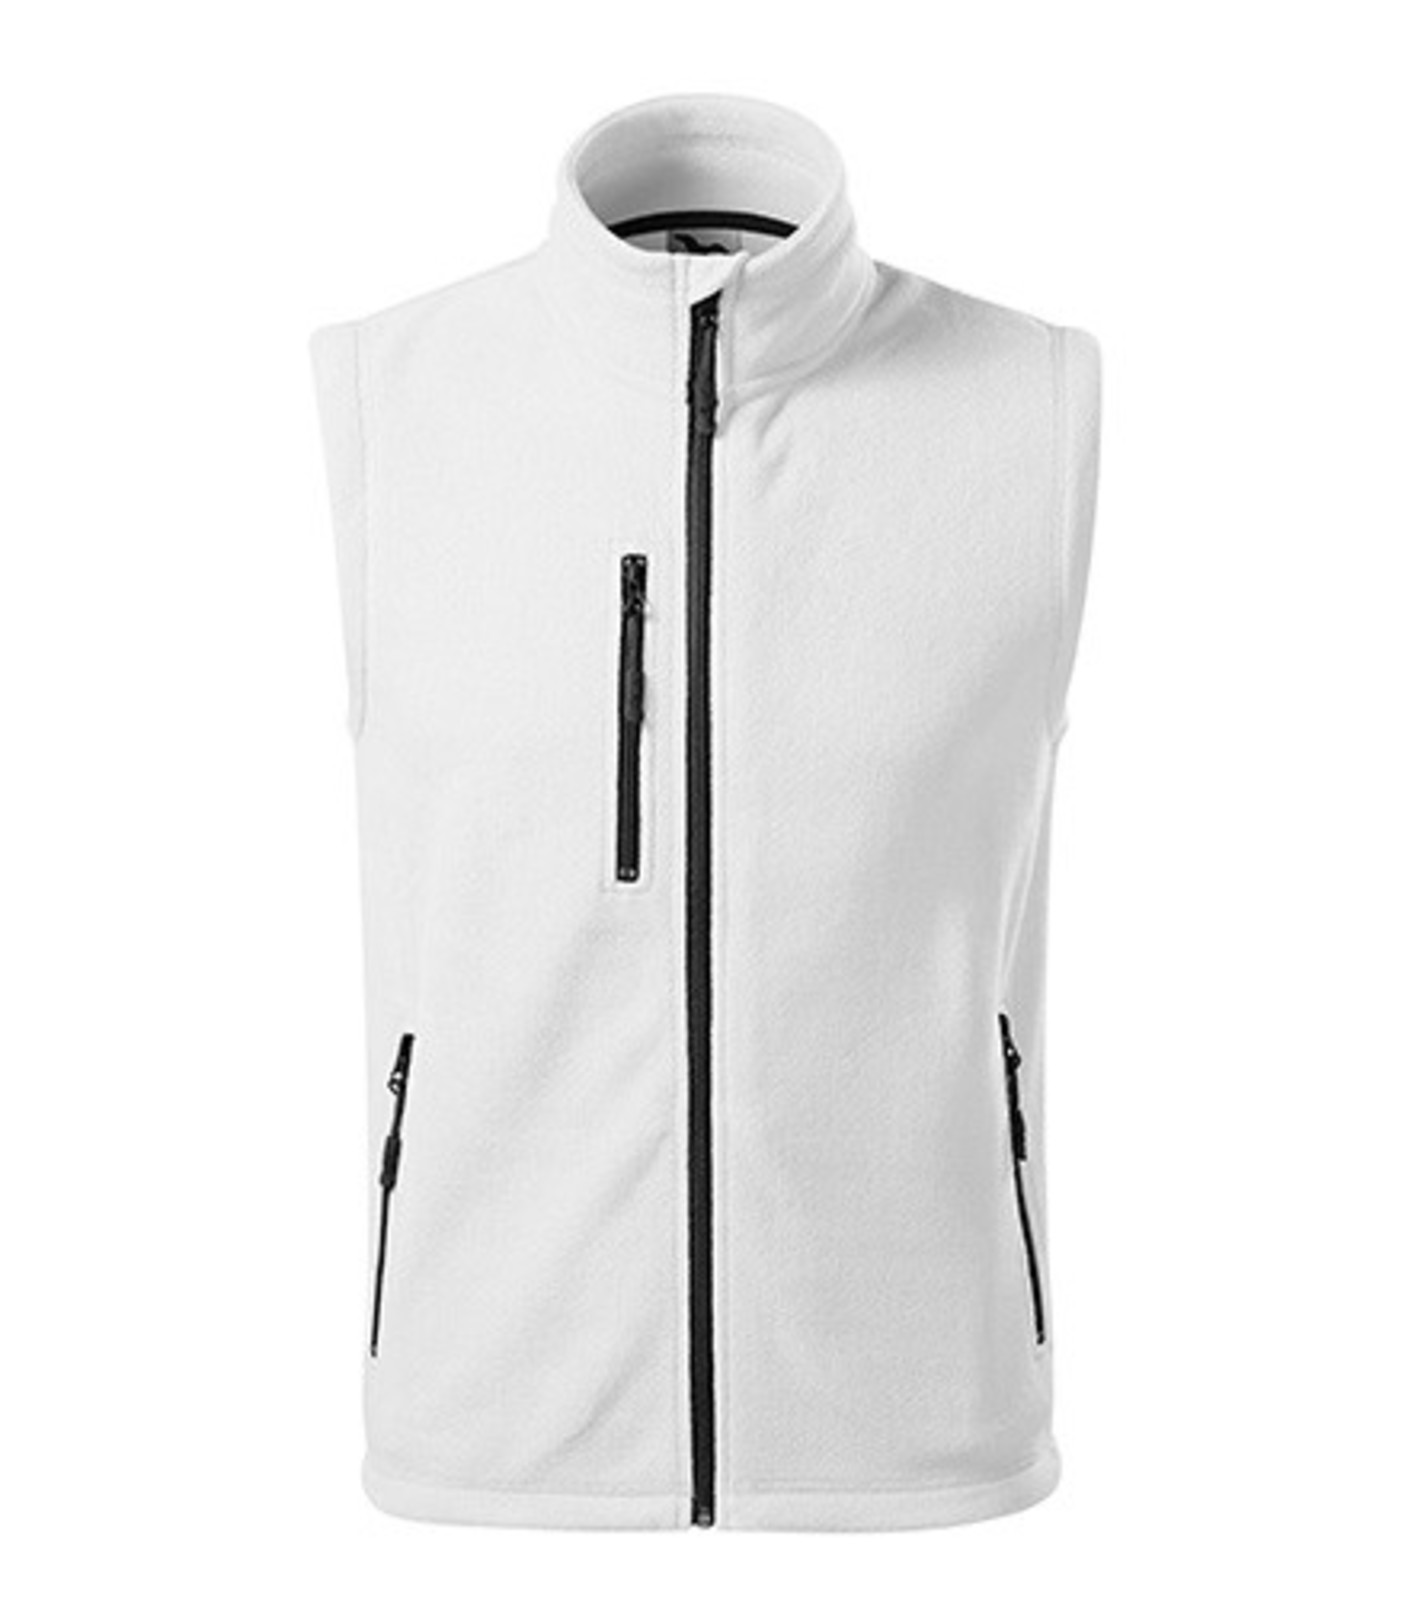 Unisex fleecová vesta Malfini Exit 525 - veľkosť: S, farba: biela